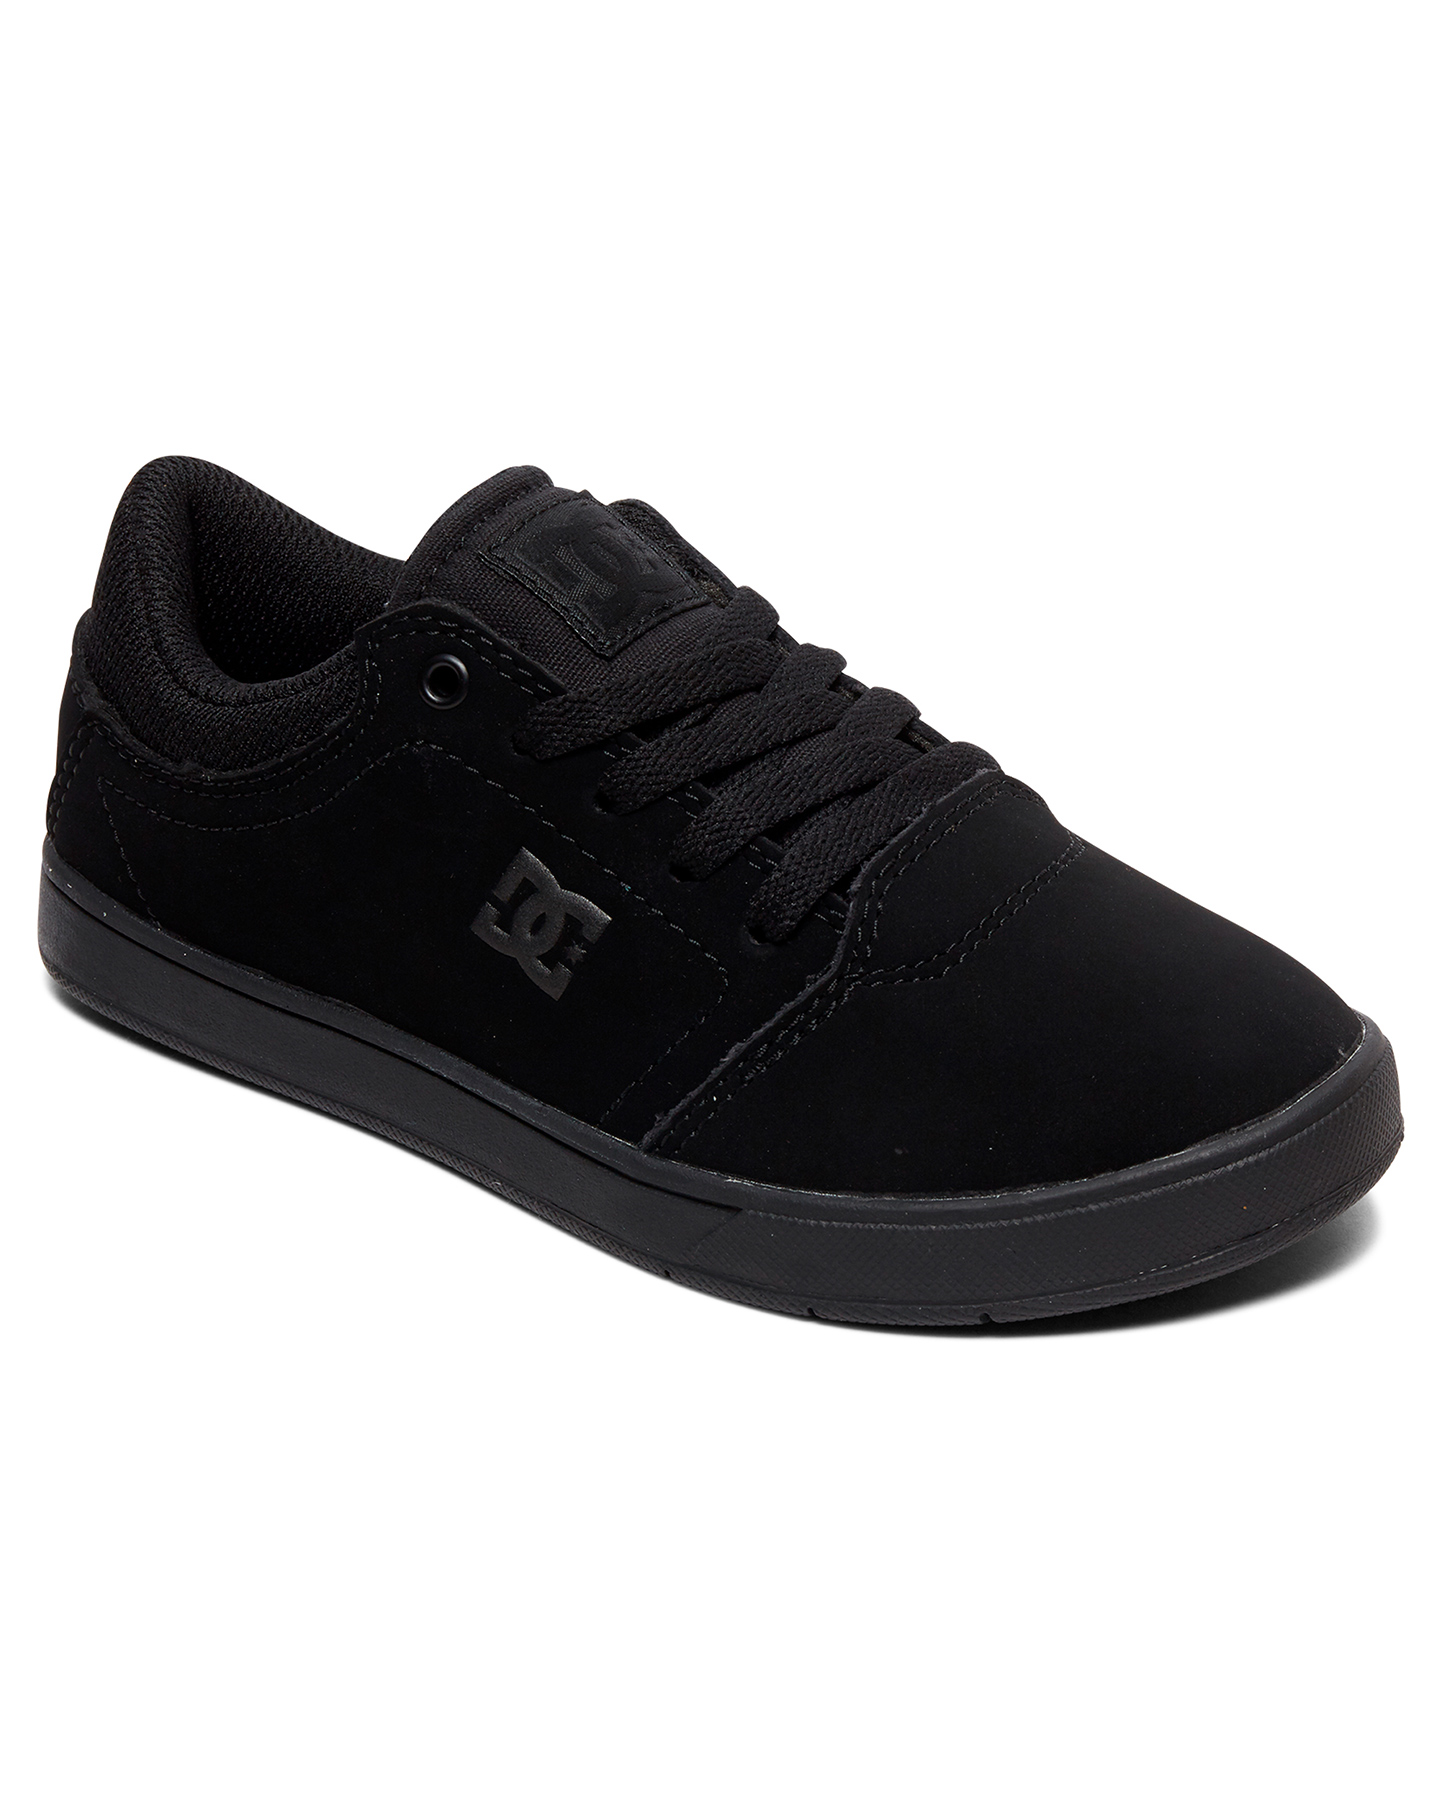 Dc Shoes Crisis Shoe - Youth - Black/Black | SurfStitch